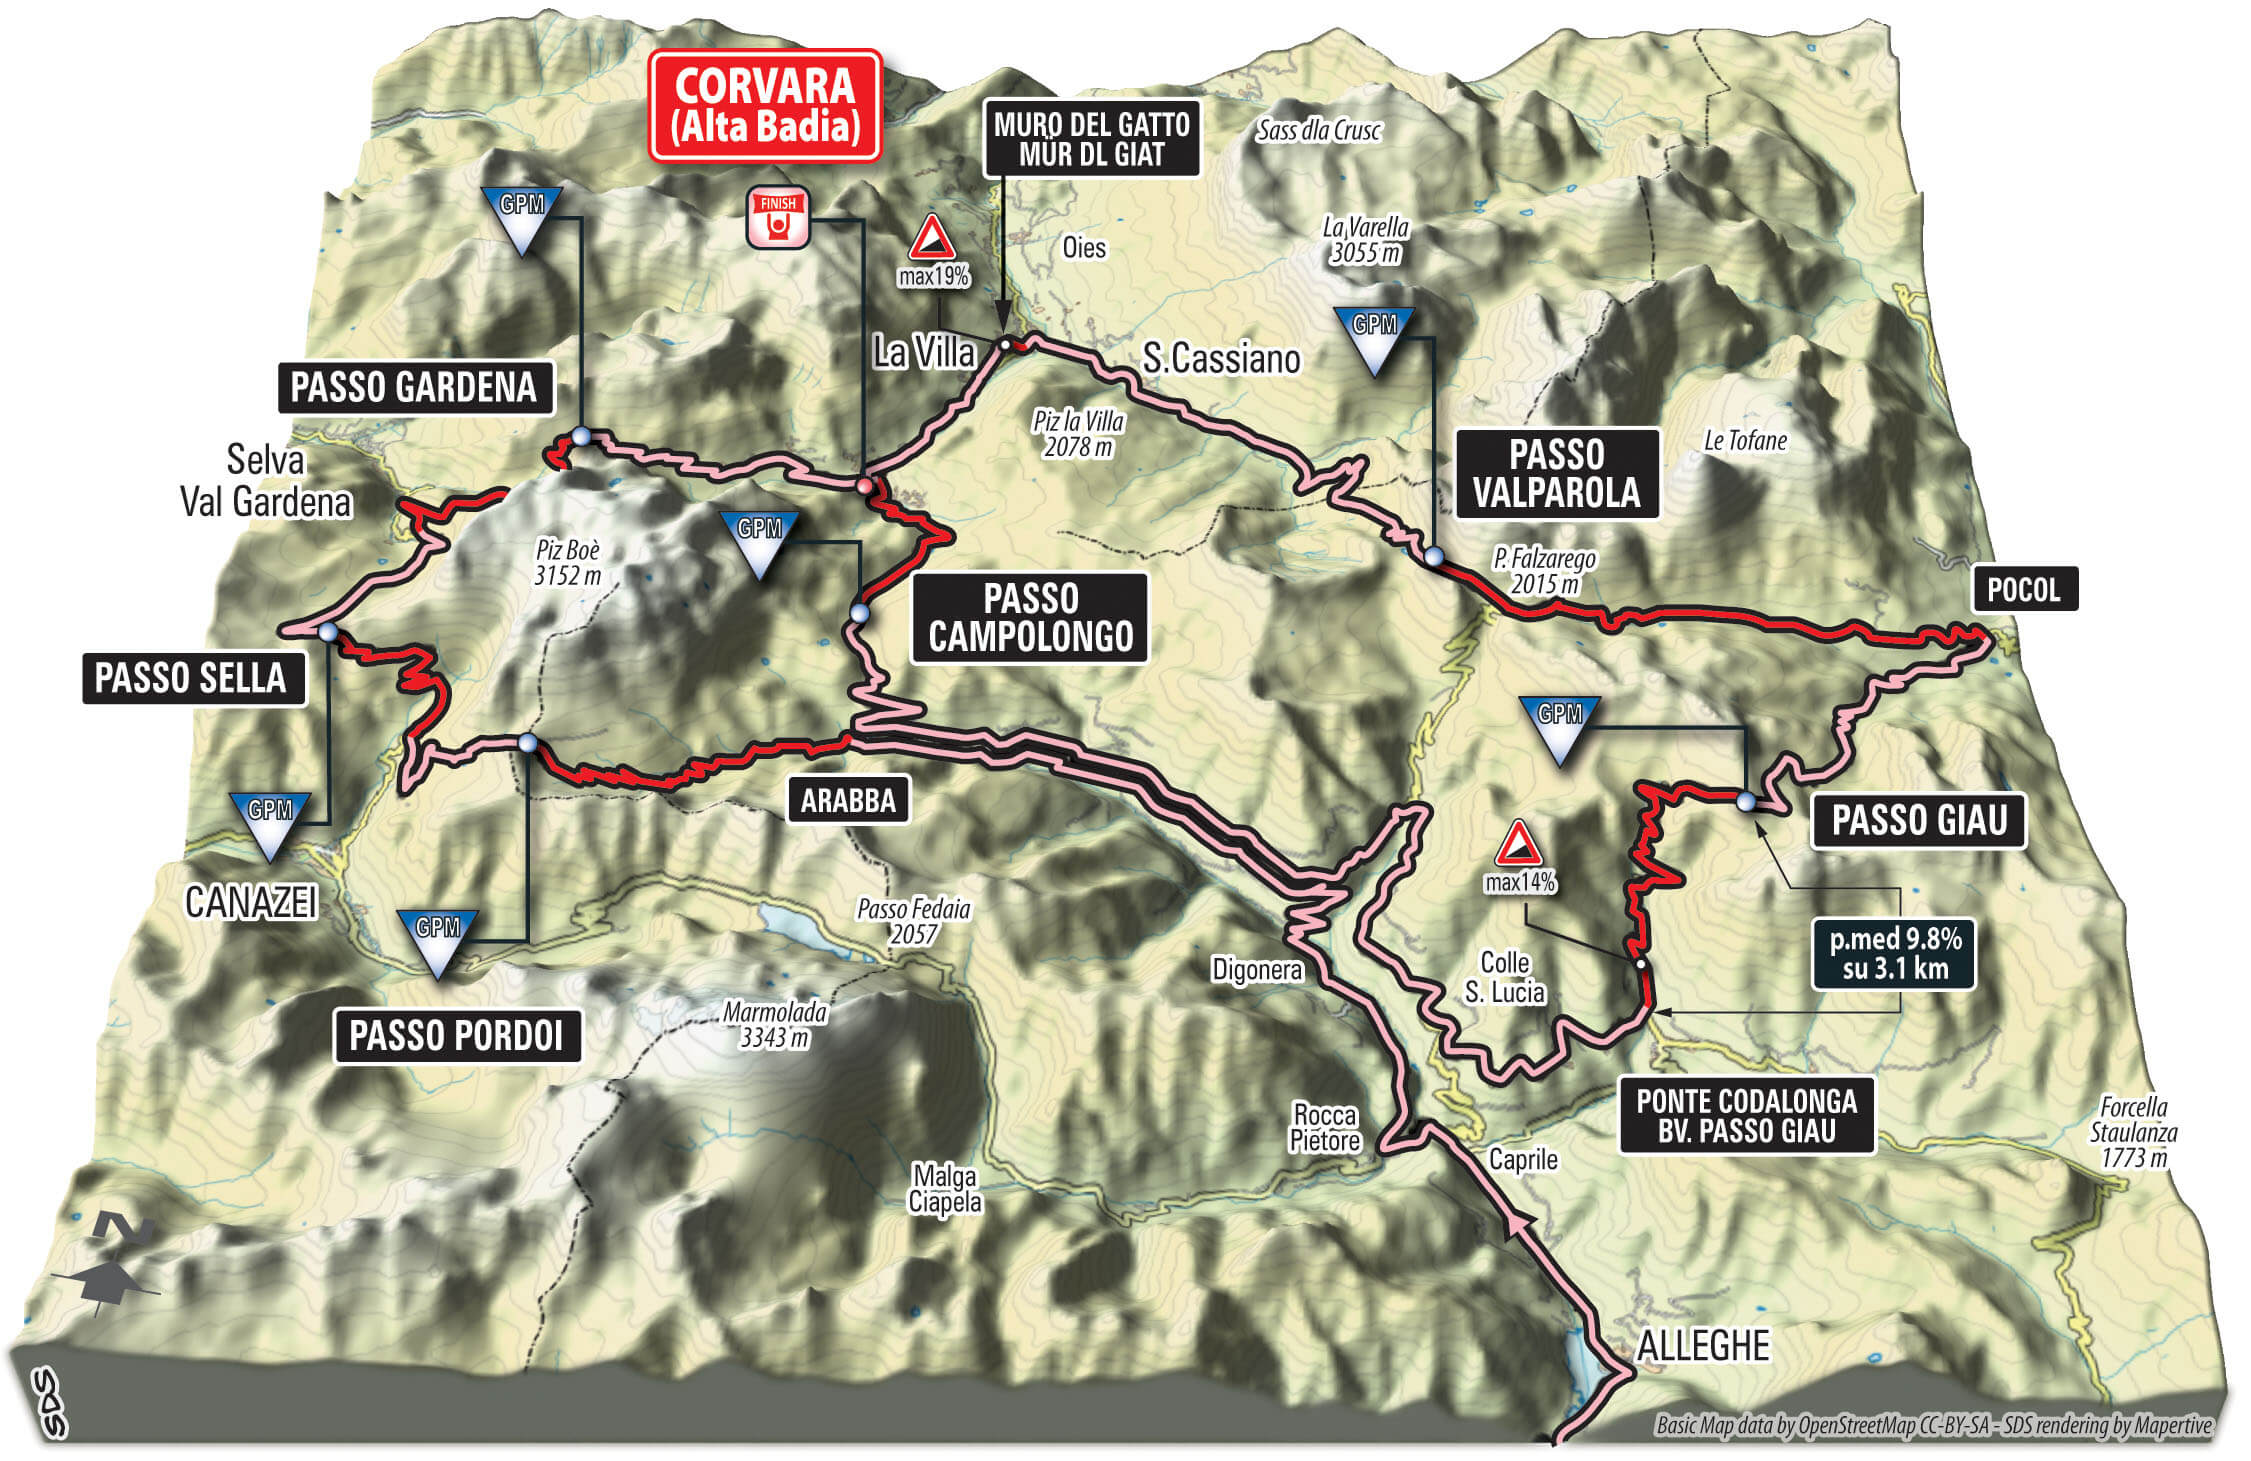 Mappa 3D tappa a Corvara del Giro d'Italia 2016